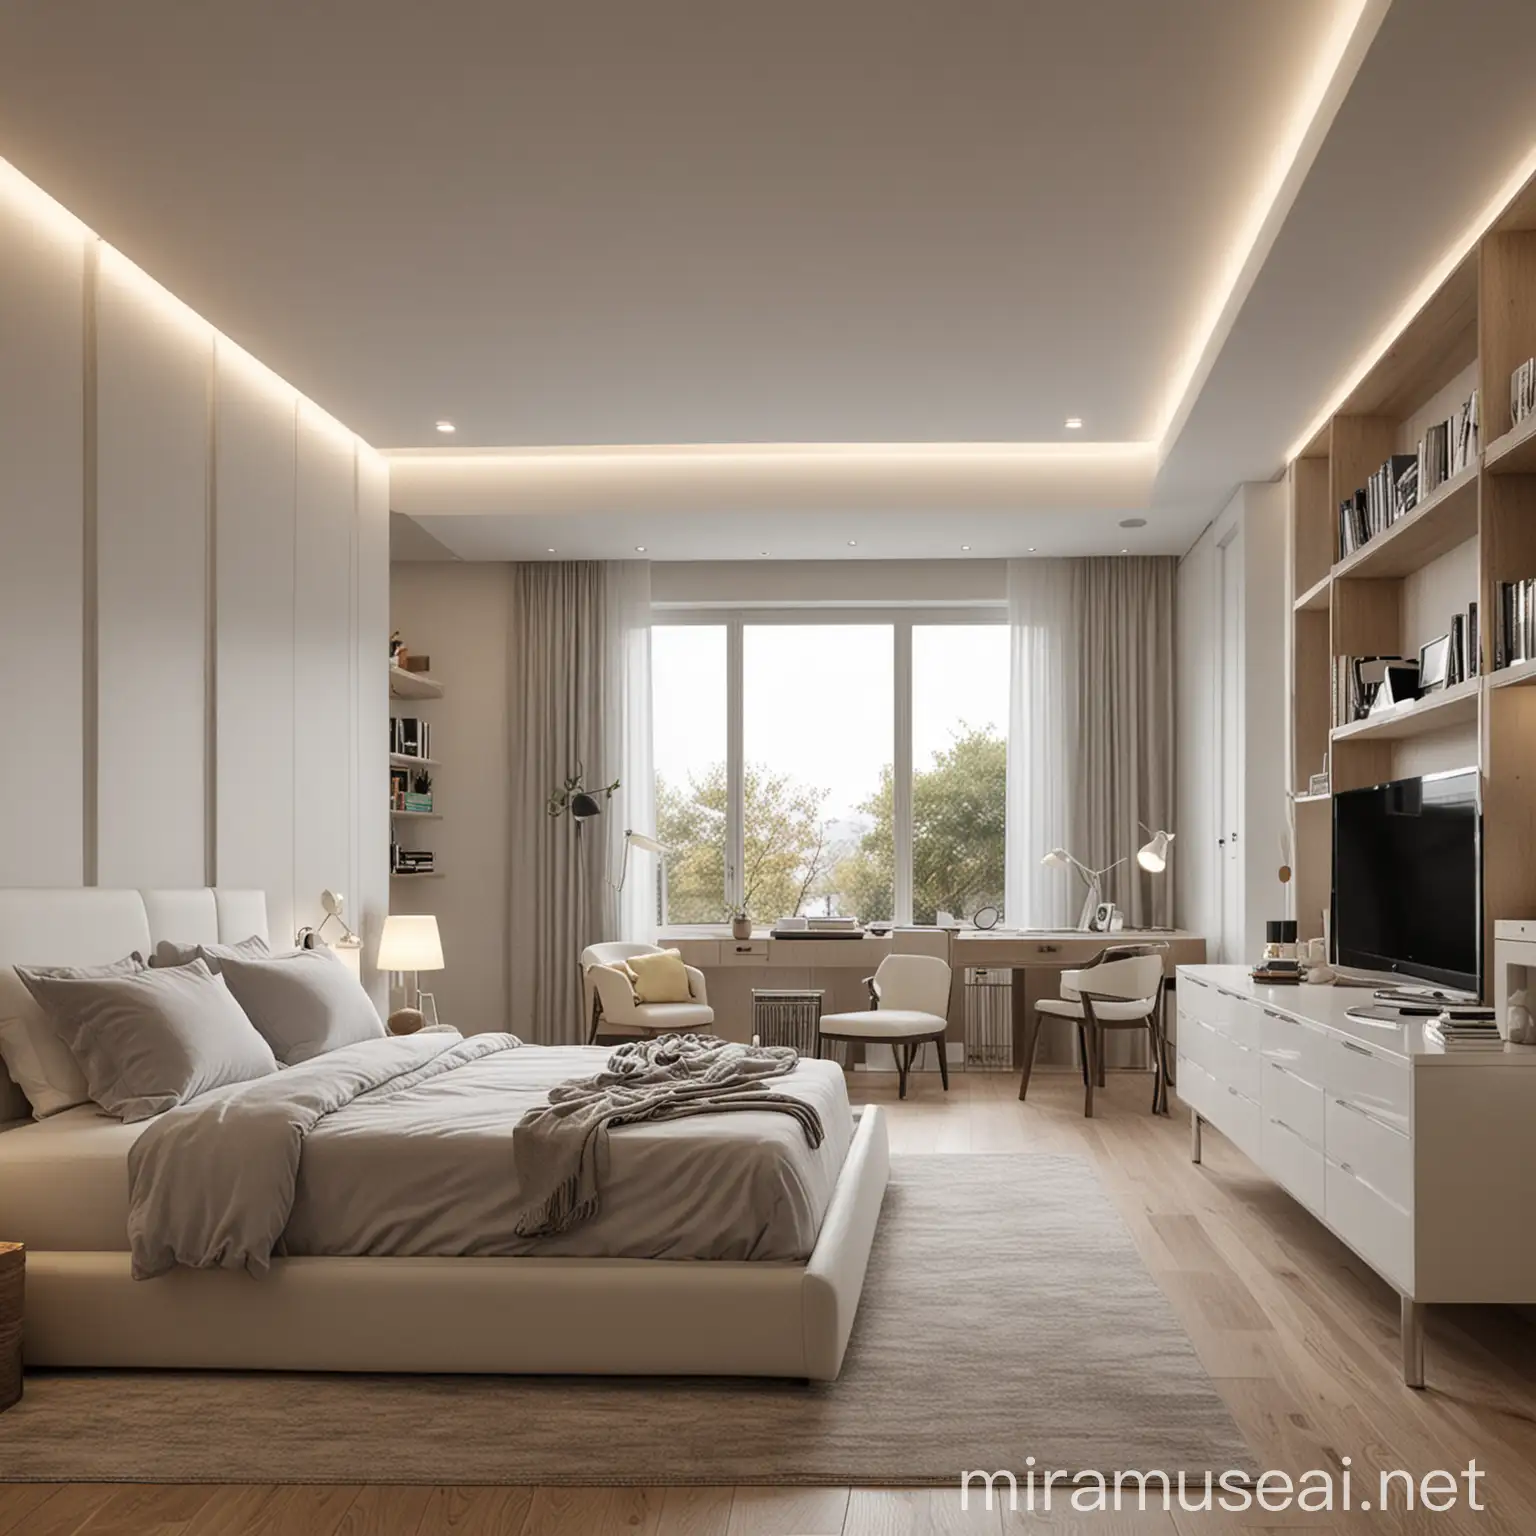 Contemporary Bedroom Interior with Minimalist Design